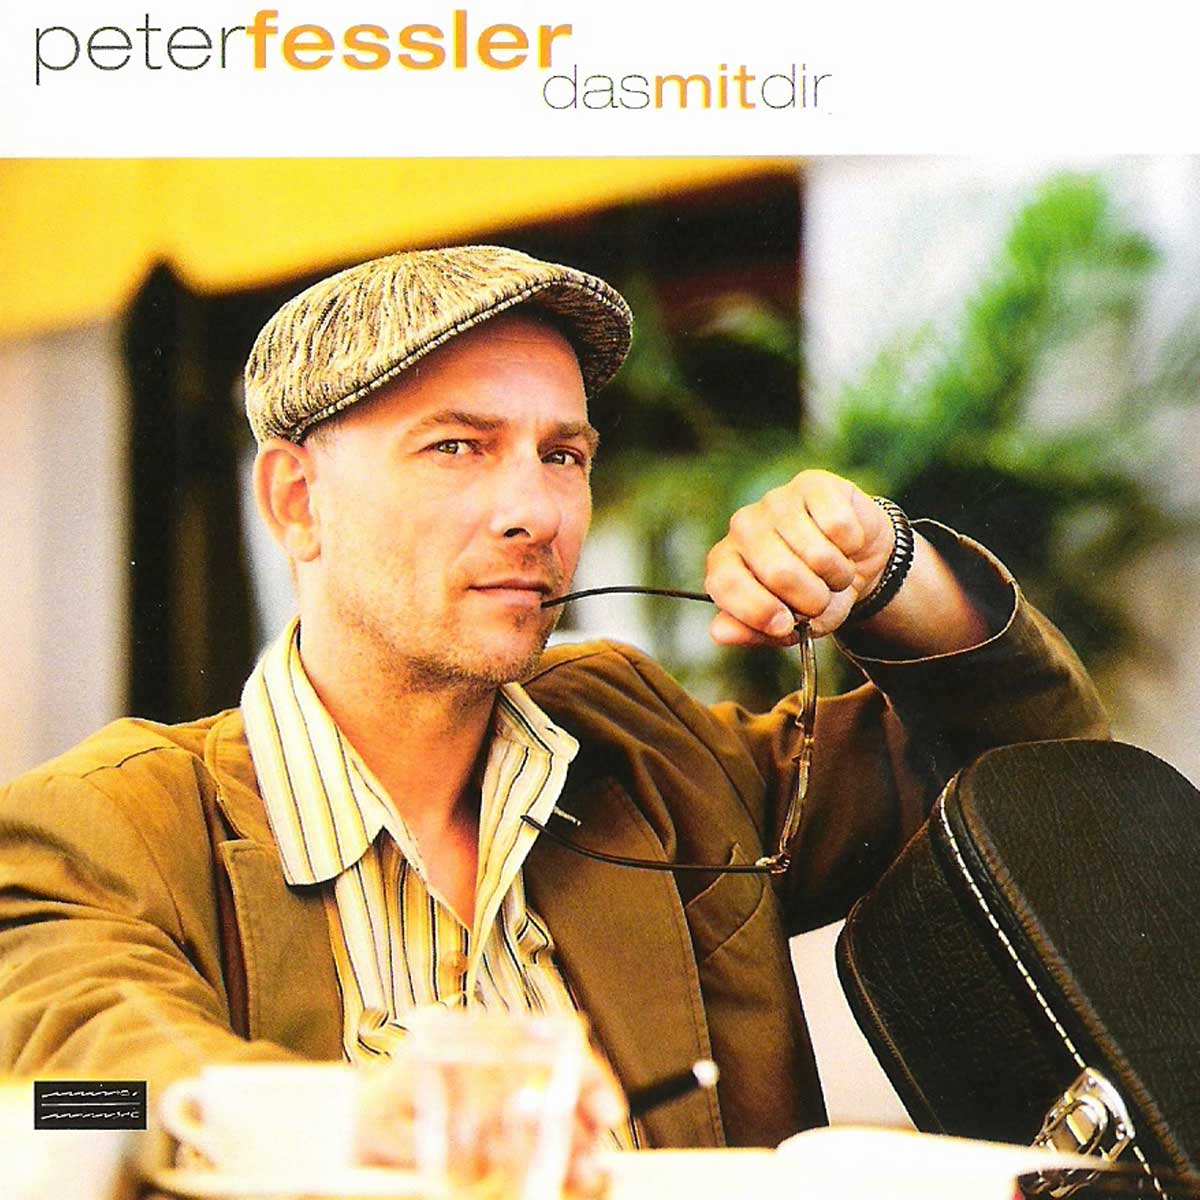 Peter Fessler Das mit dir